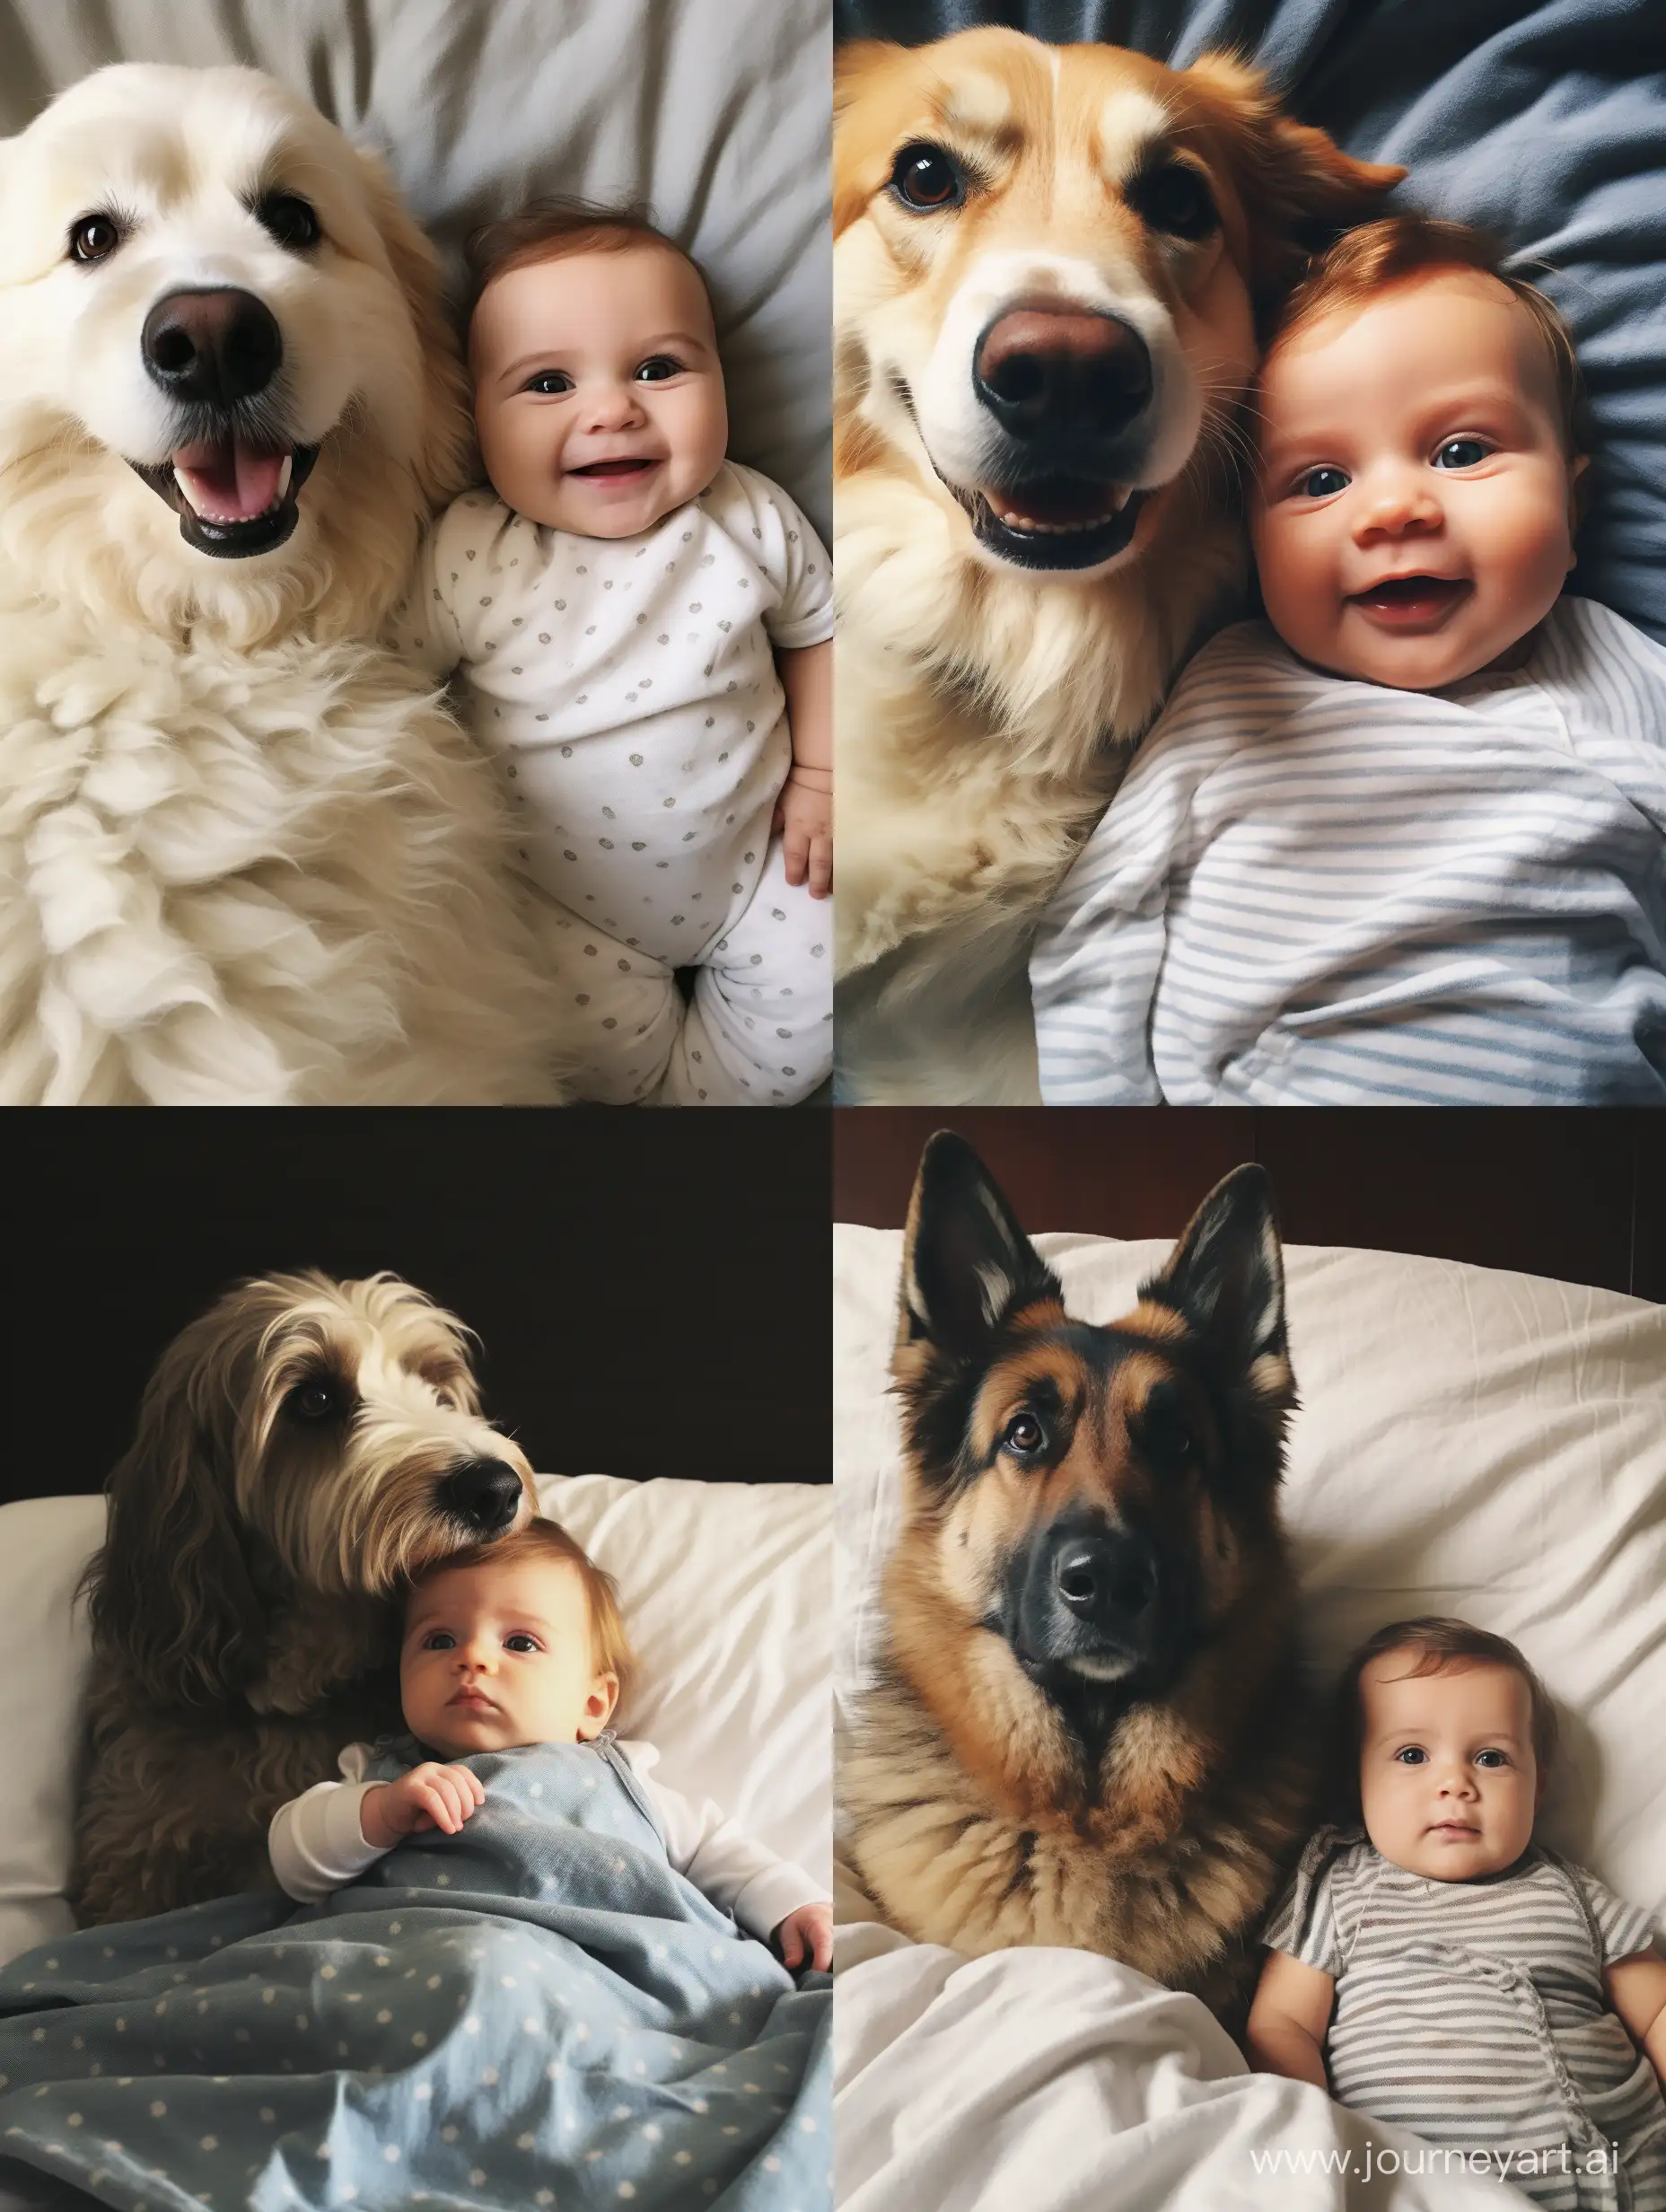 Loving-Canine-Babysitter-Heartwarming-Moment-Captured-in-34-Aspect-Ratio